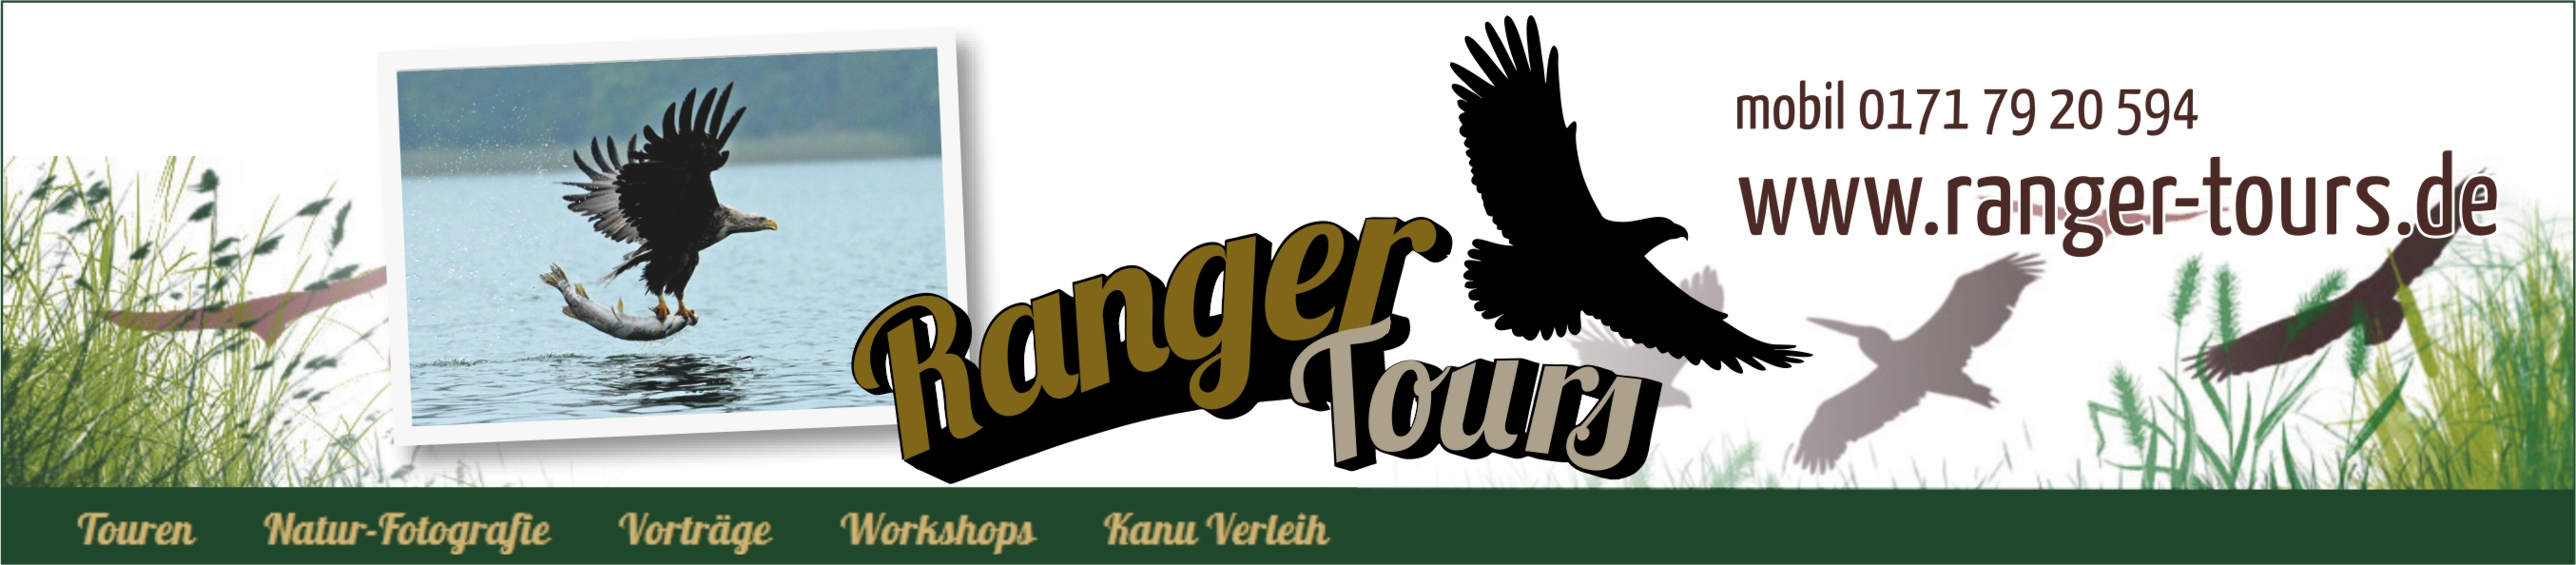 www.ranger-tours.de